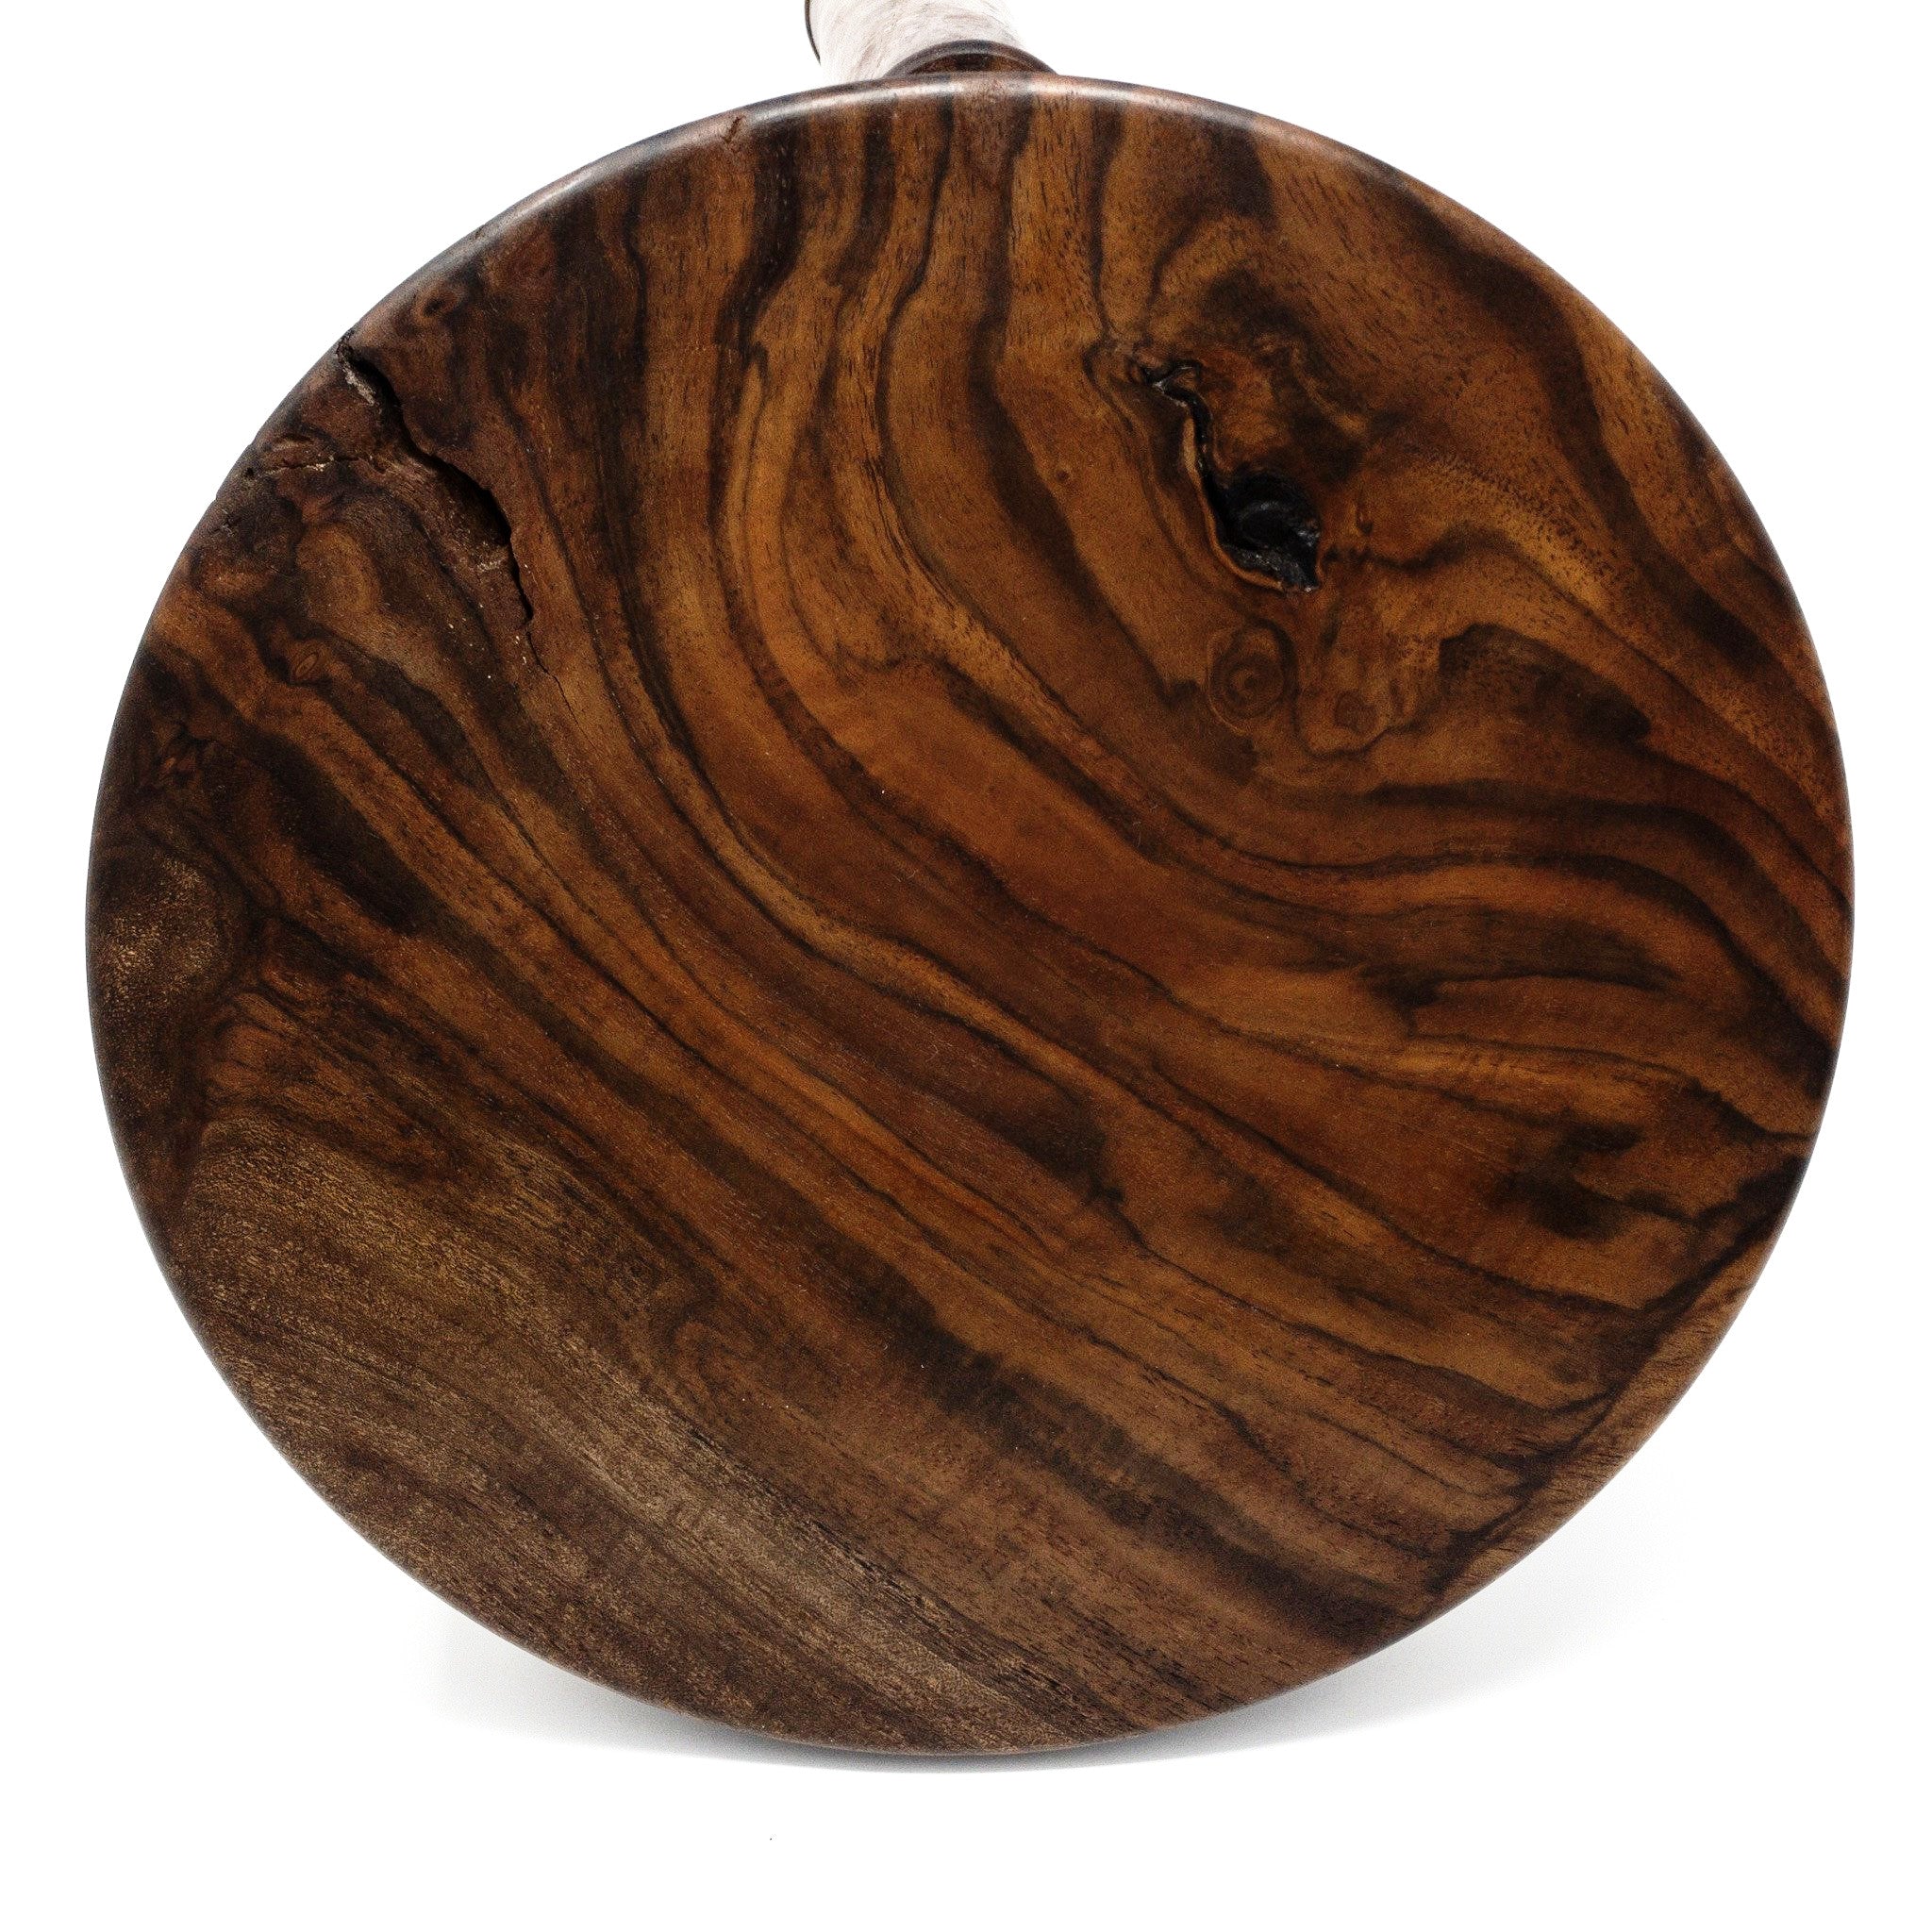 Round Black Walnut wood turned stool. Elegant design. Great gift for dad.